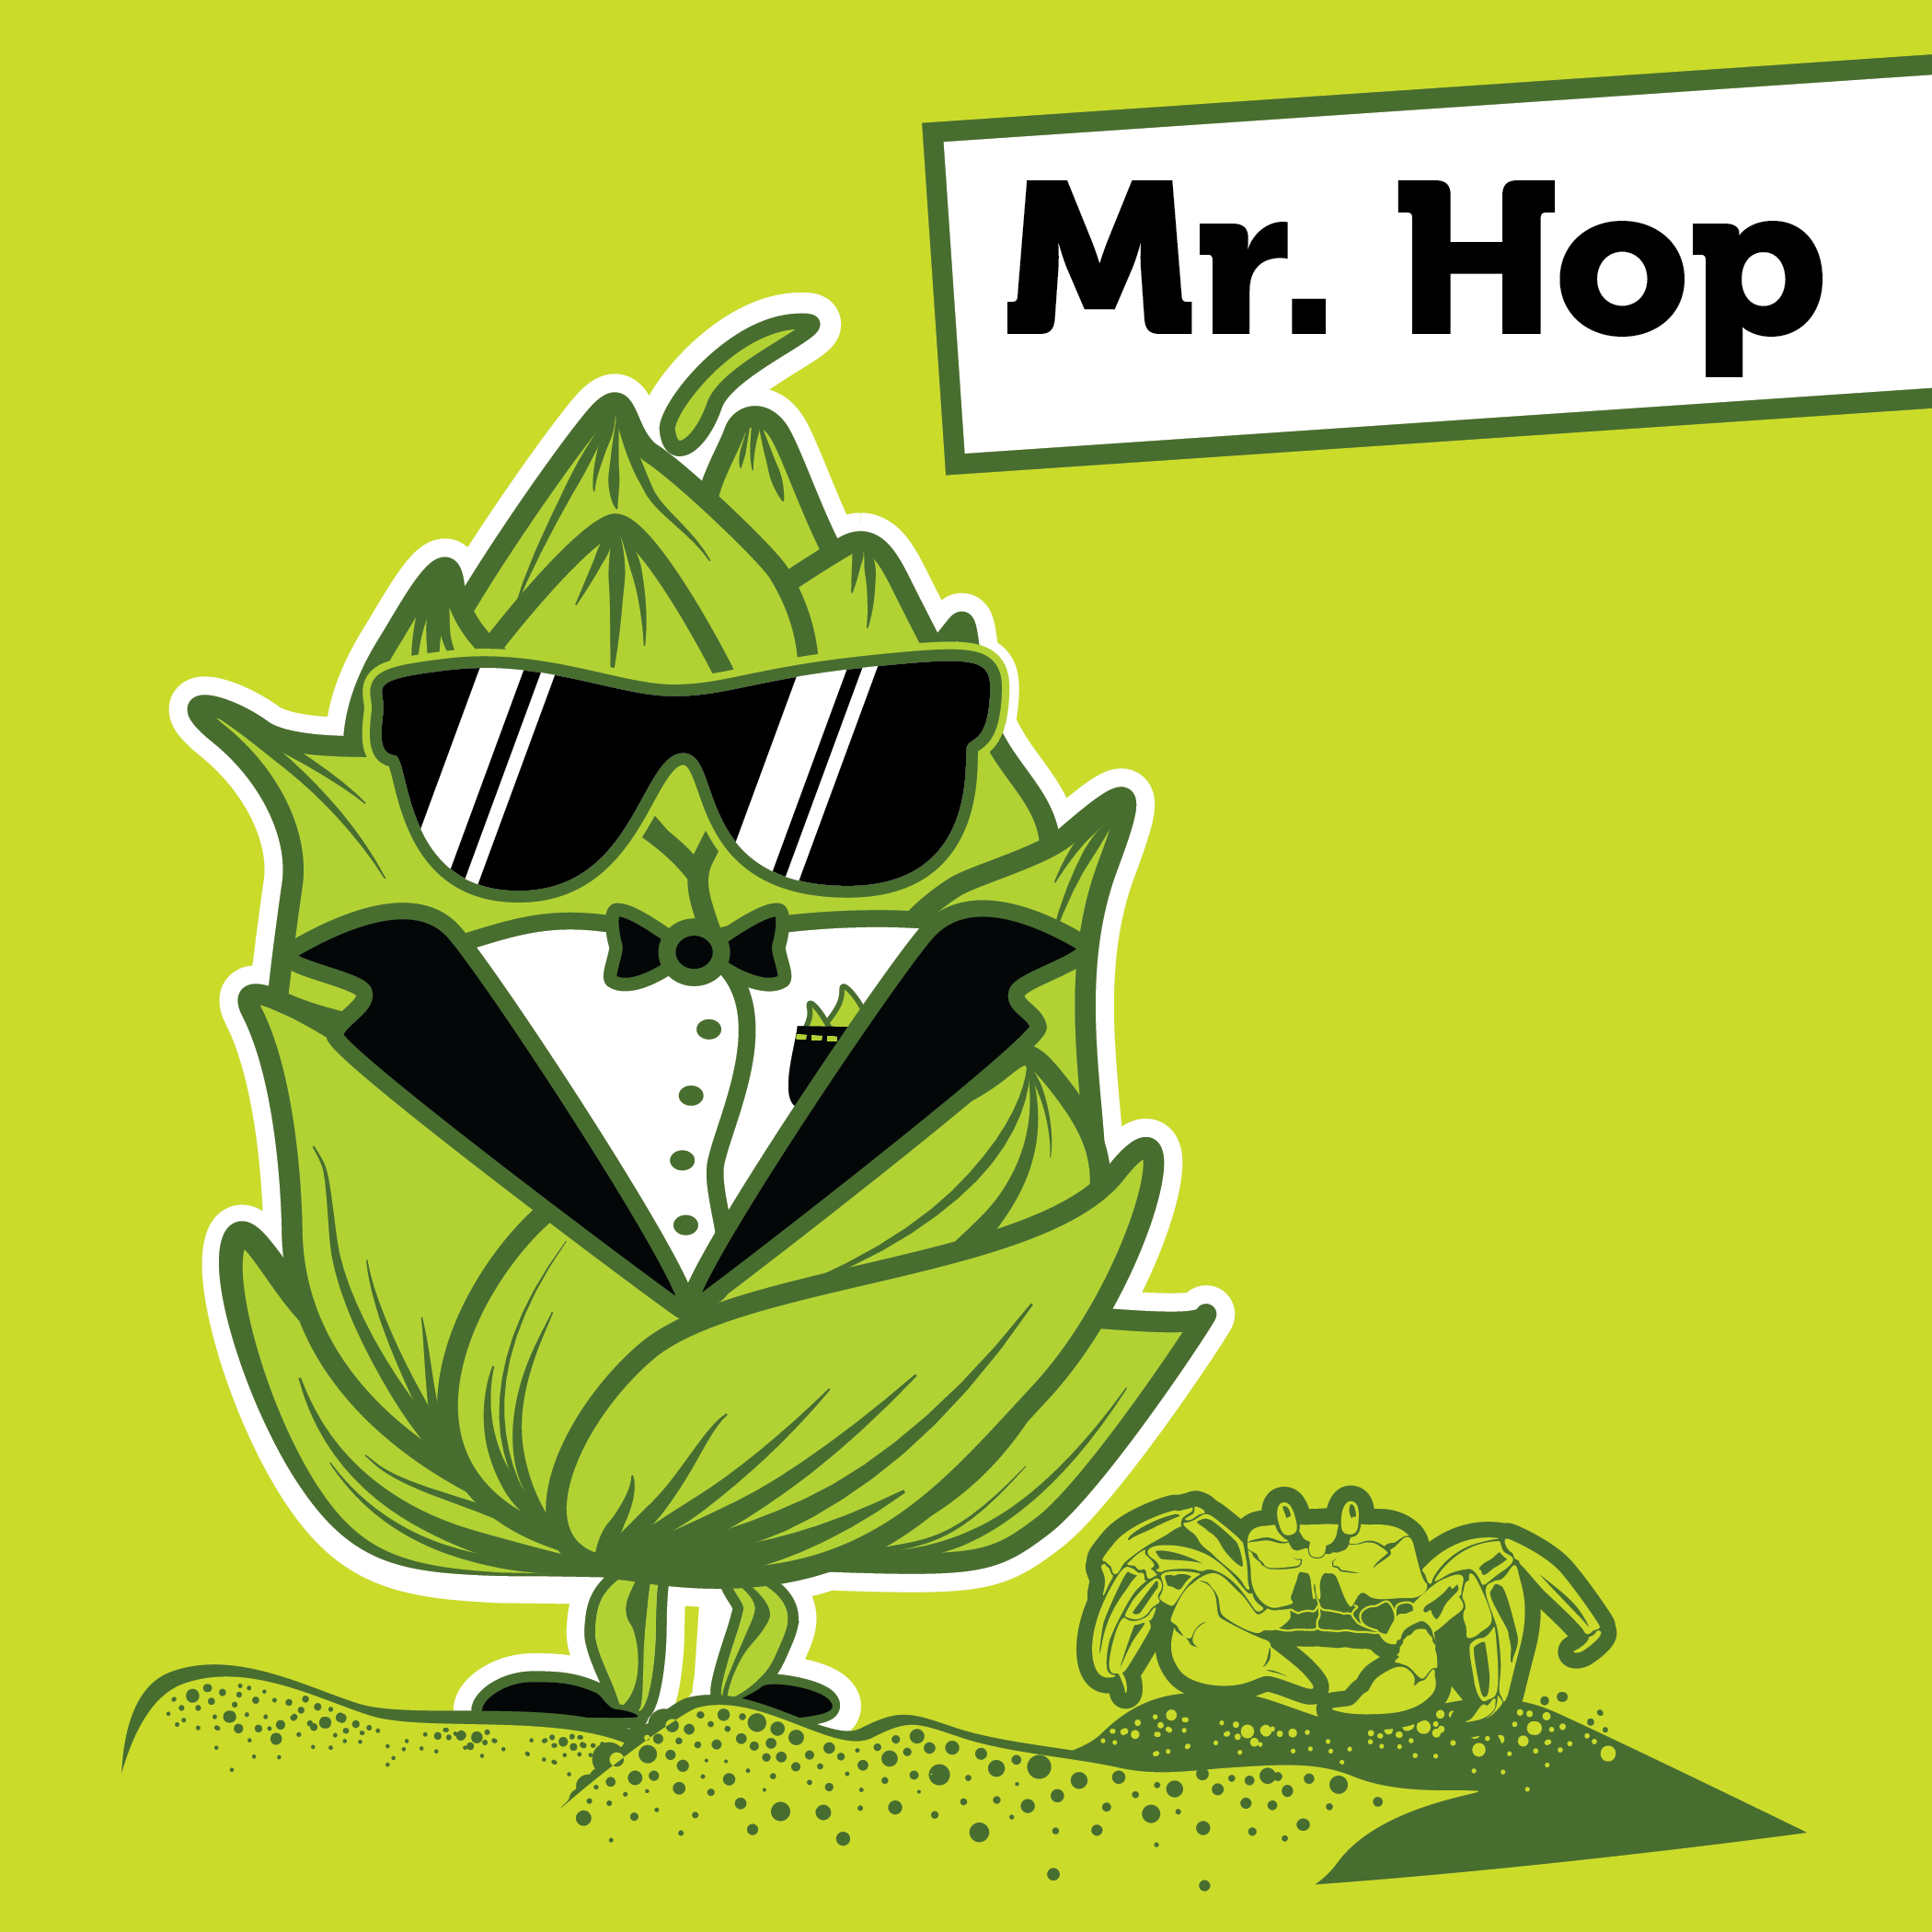 Mr. Hop